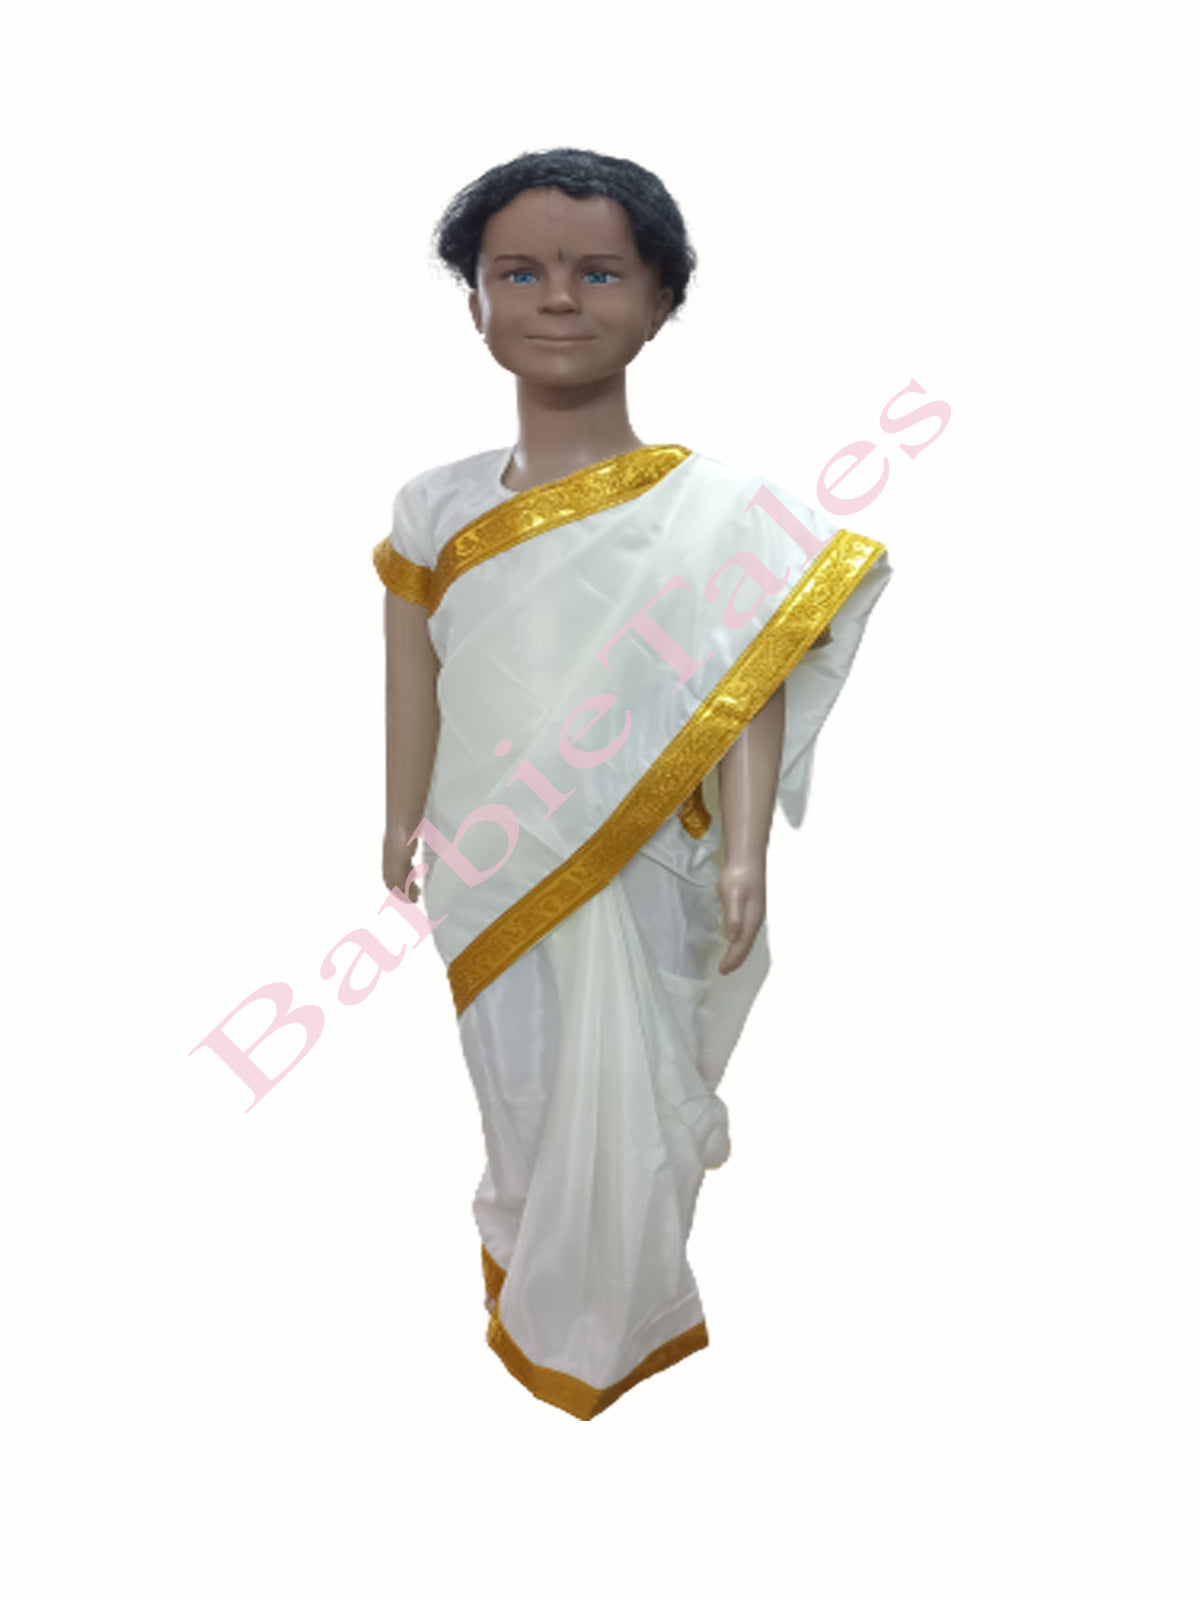 Kerala dress hi-res stock photography and images - Alamy